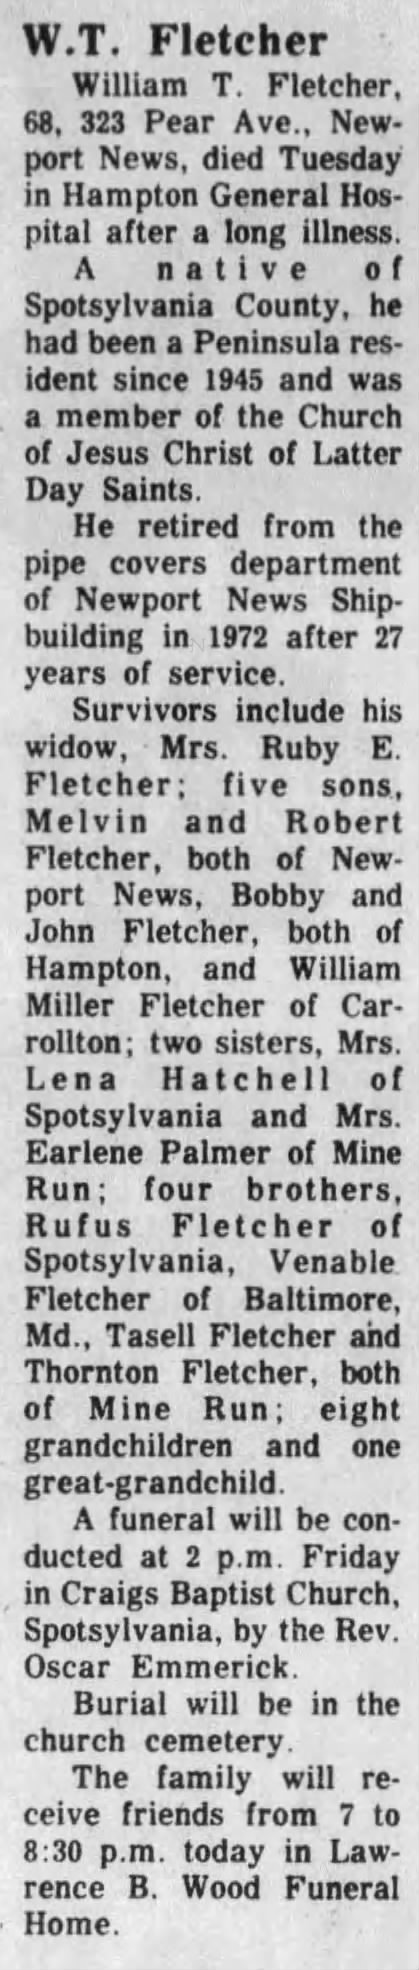 Obituary for W.T. Fletcher (Aged 68)